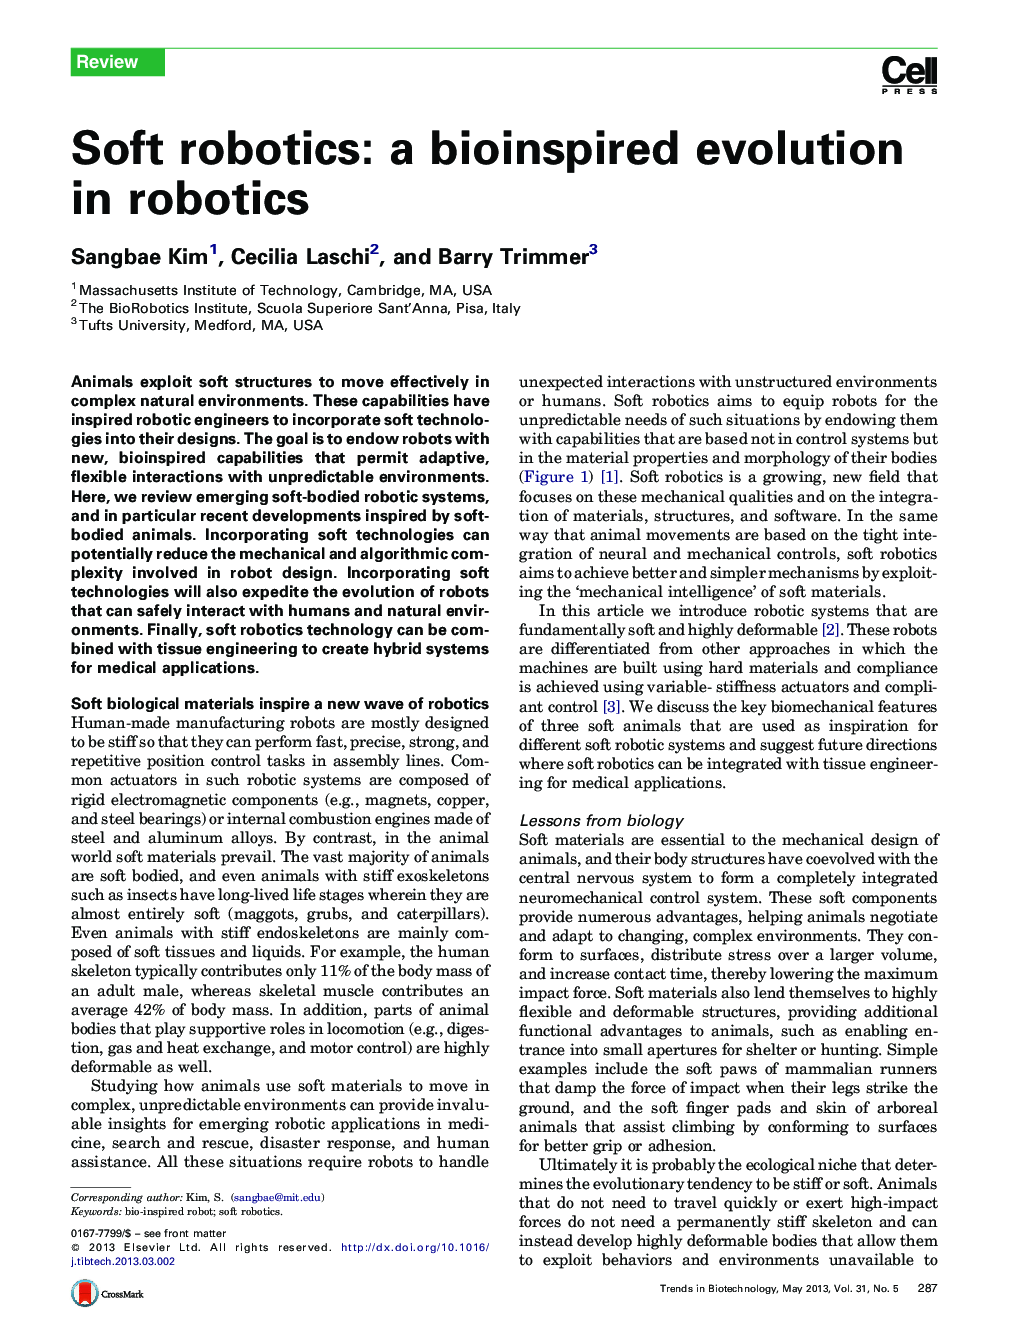 Soft robotics: a bioinspired evolution in robotics